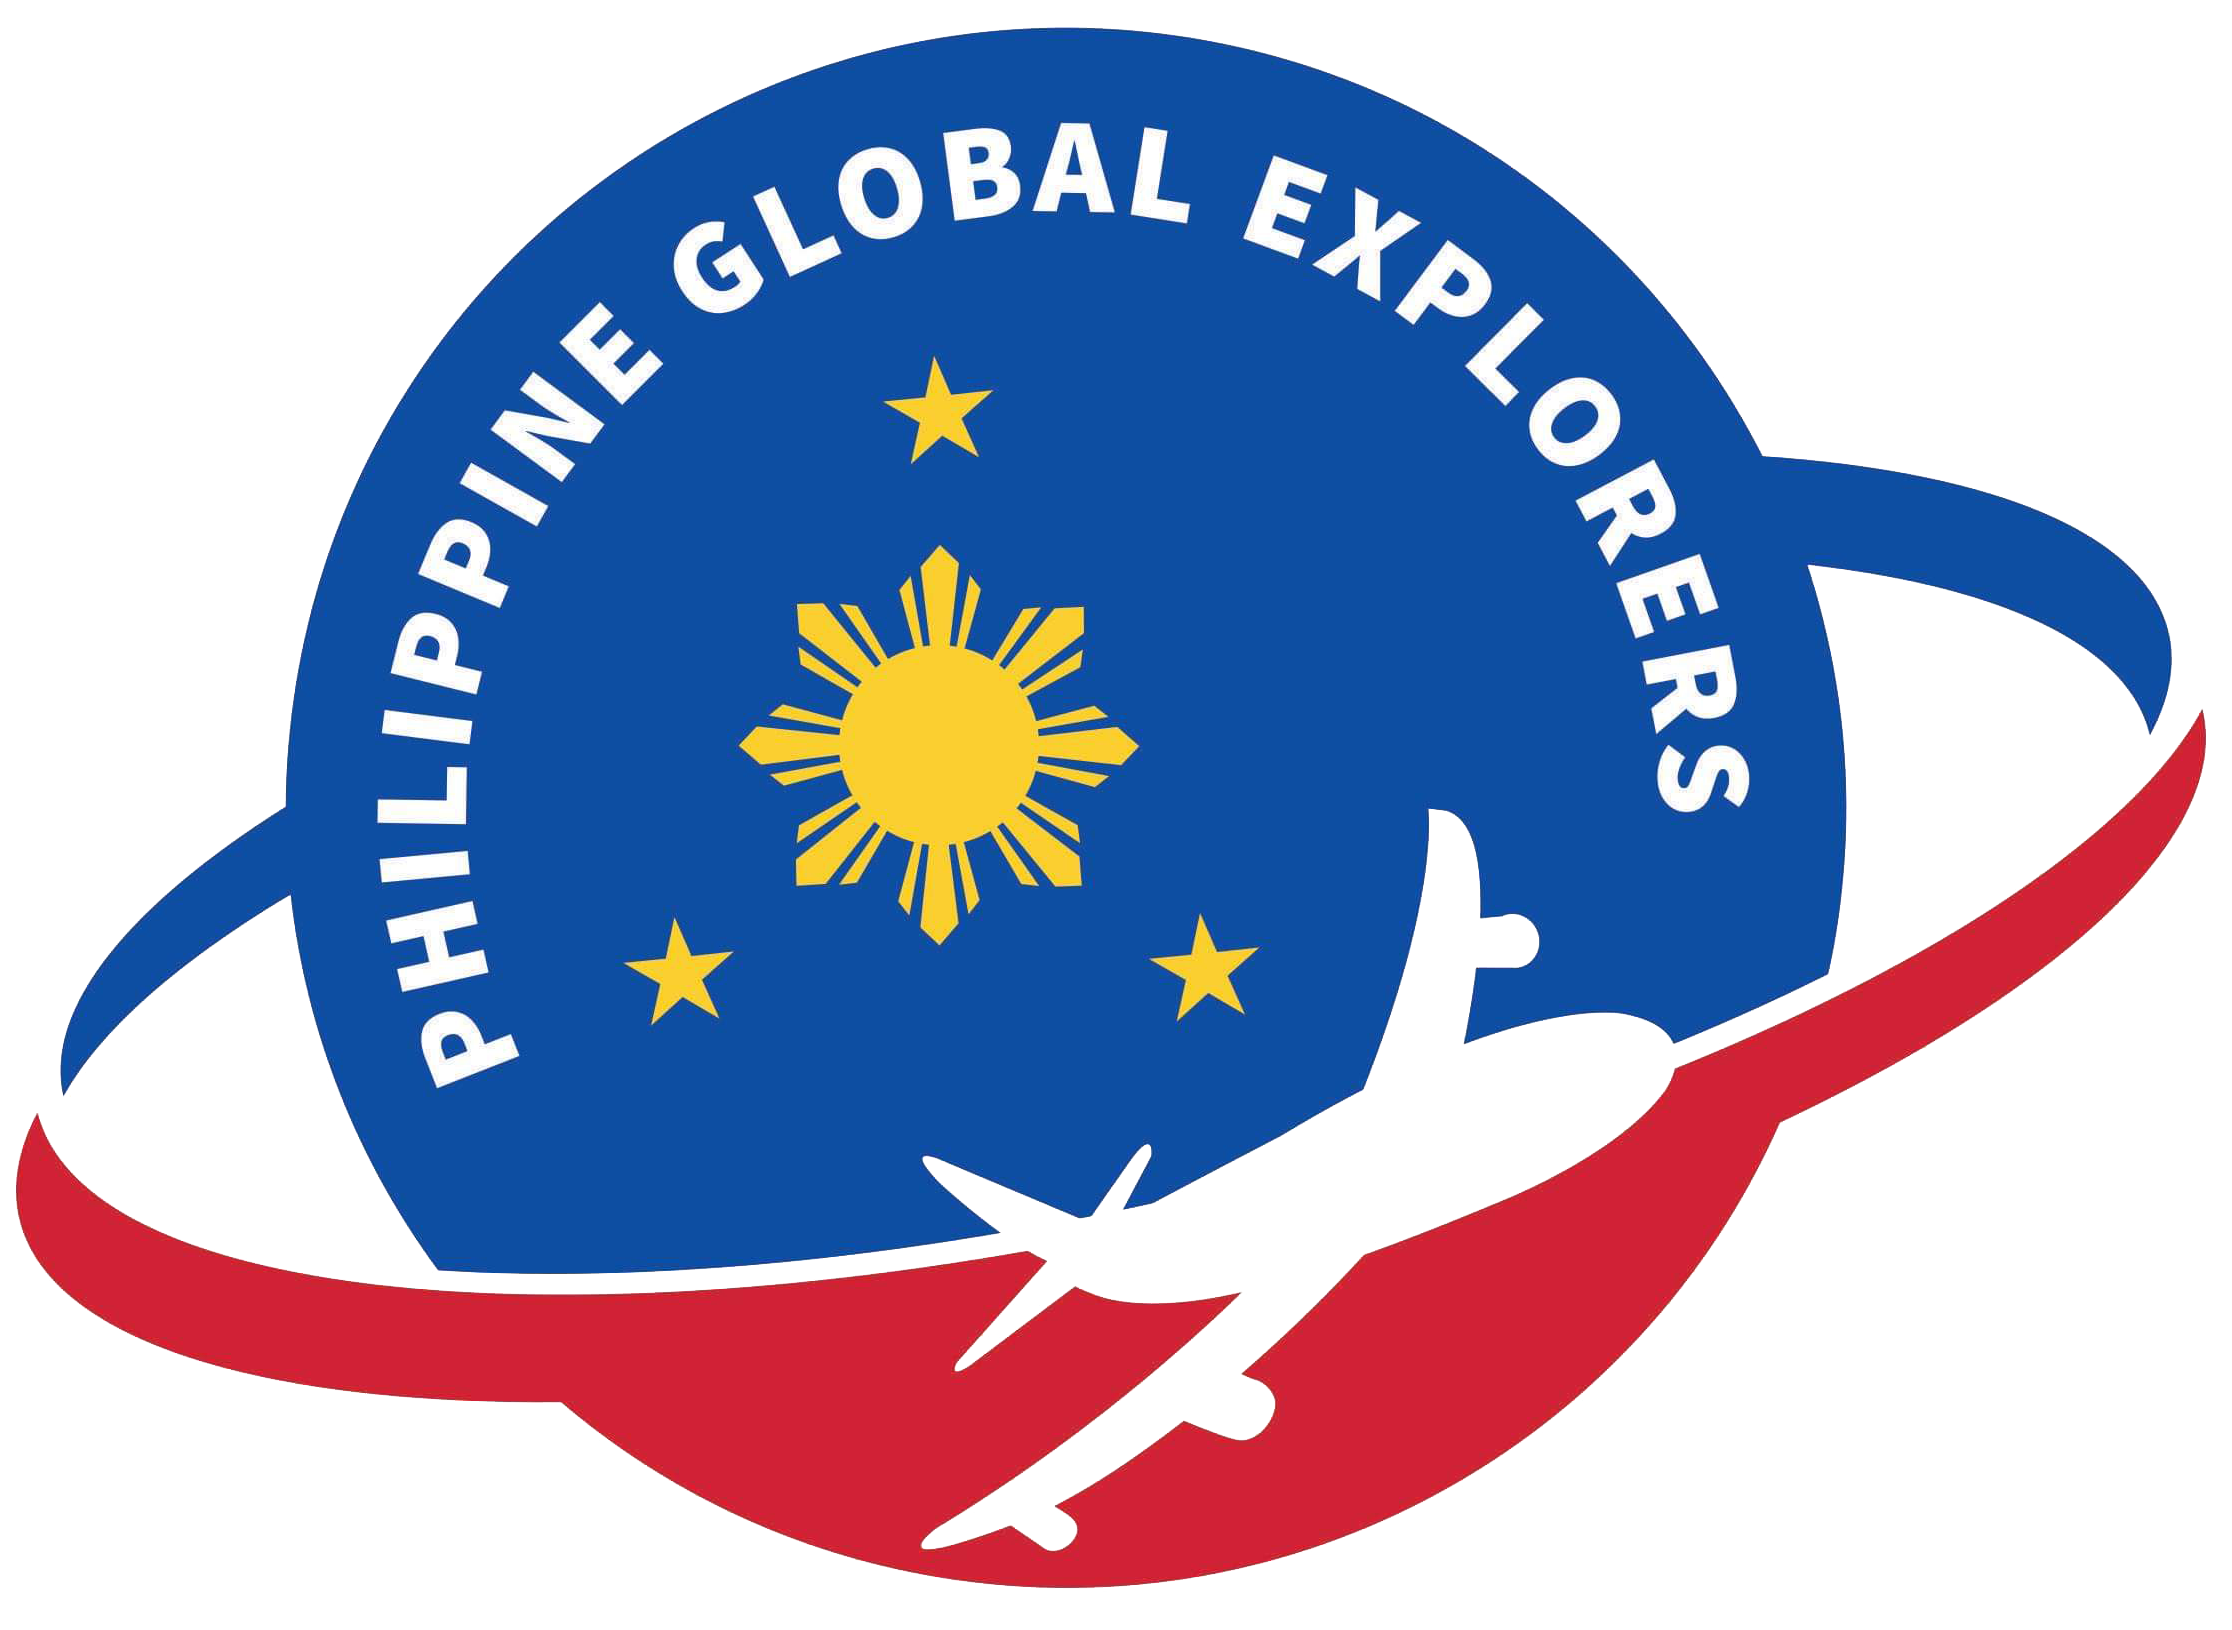 Philippine Global Explorers